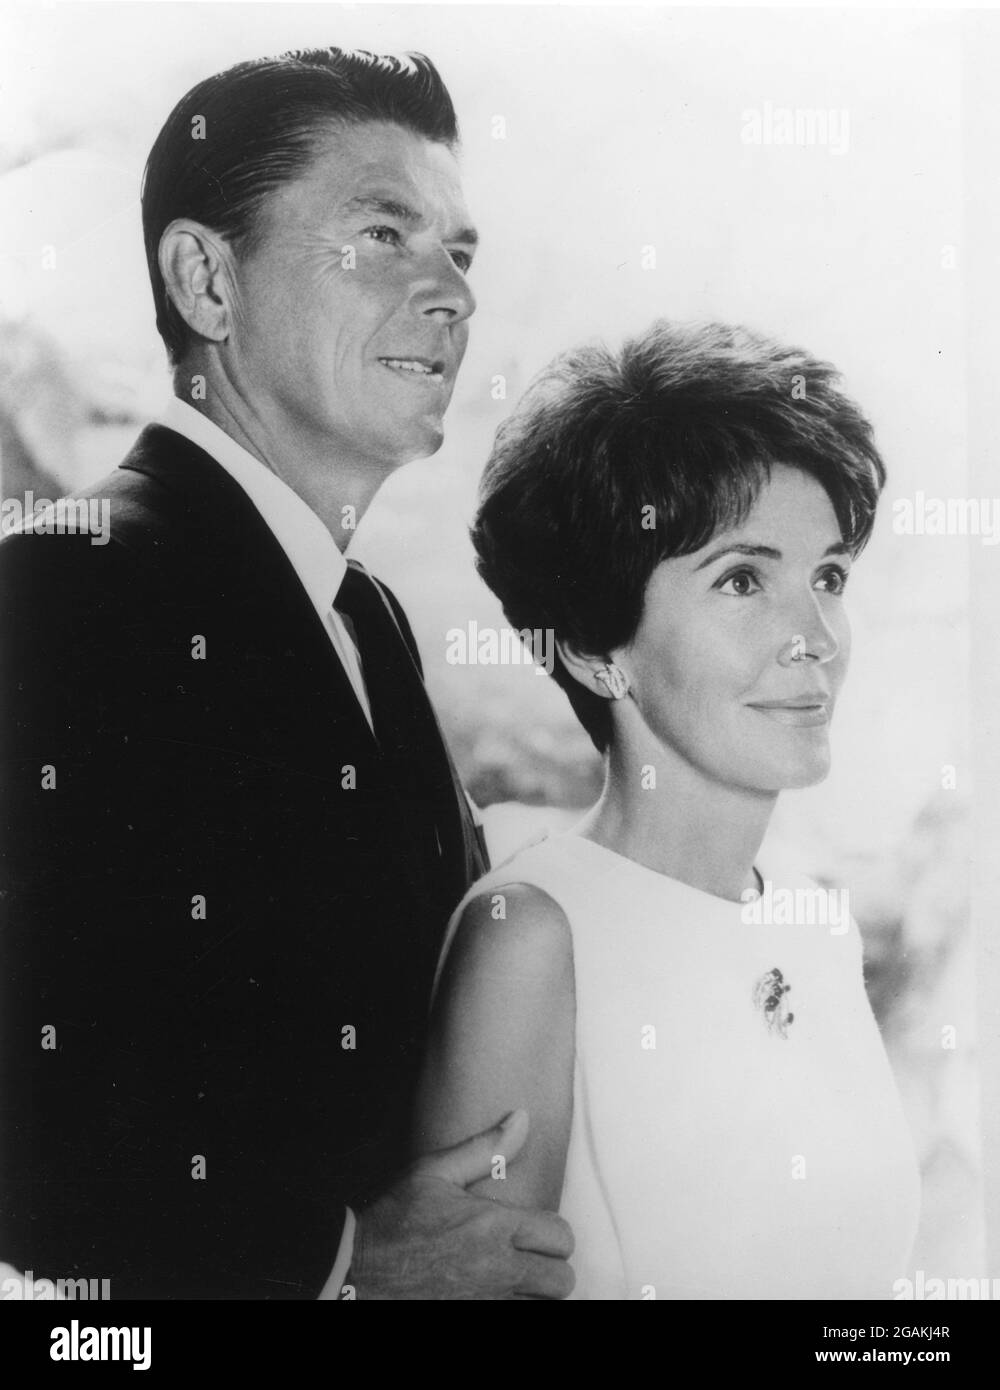 Governor of California Ronald Reagan (1911-2004) with his wife Nancy Davis Reagan (1921-2016), Sacramento, CA, 1971. (Photo by Office of Governor Reagan/RBM Vintage Images) Stock Photo